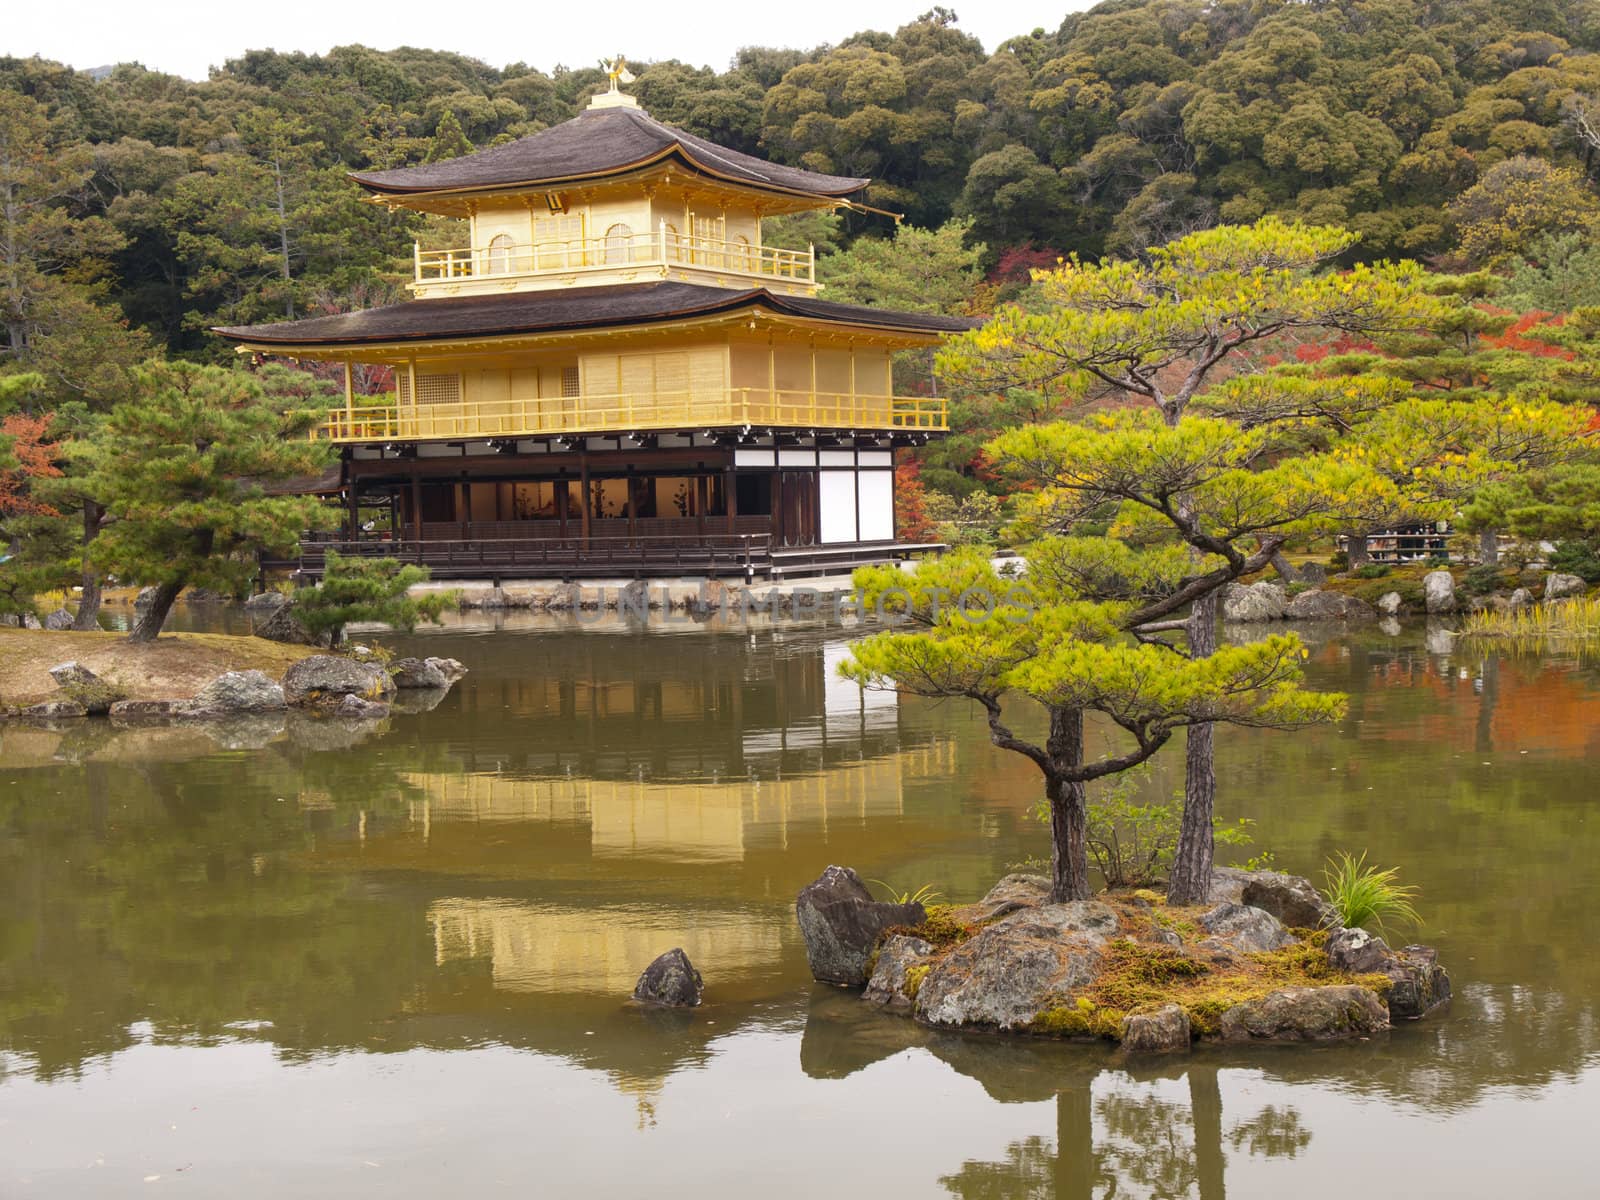 Kinkakuji Temple or The Golden Pavilion temple in autumn, Kyoto, Japan